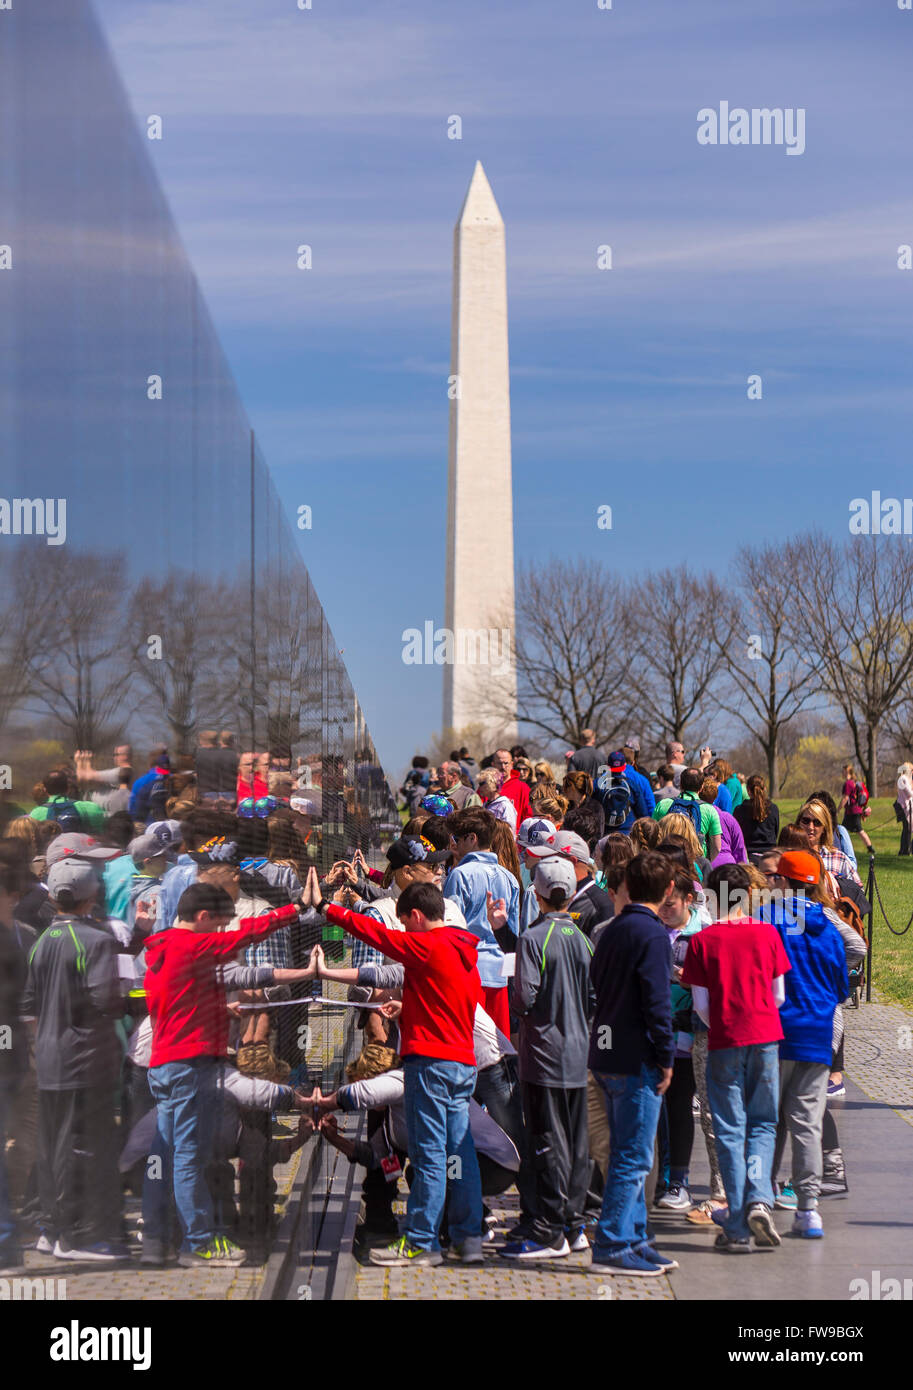 WASHINGTON, DC, USA - Crowd gathers at Vietnam War Memorial, and Washington Monument. Stock Photo